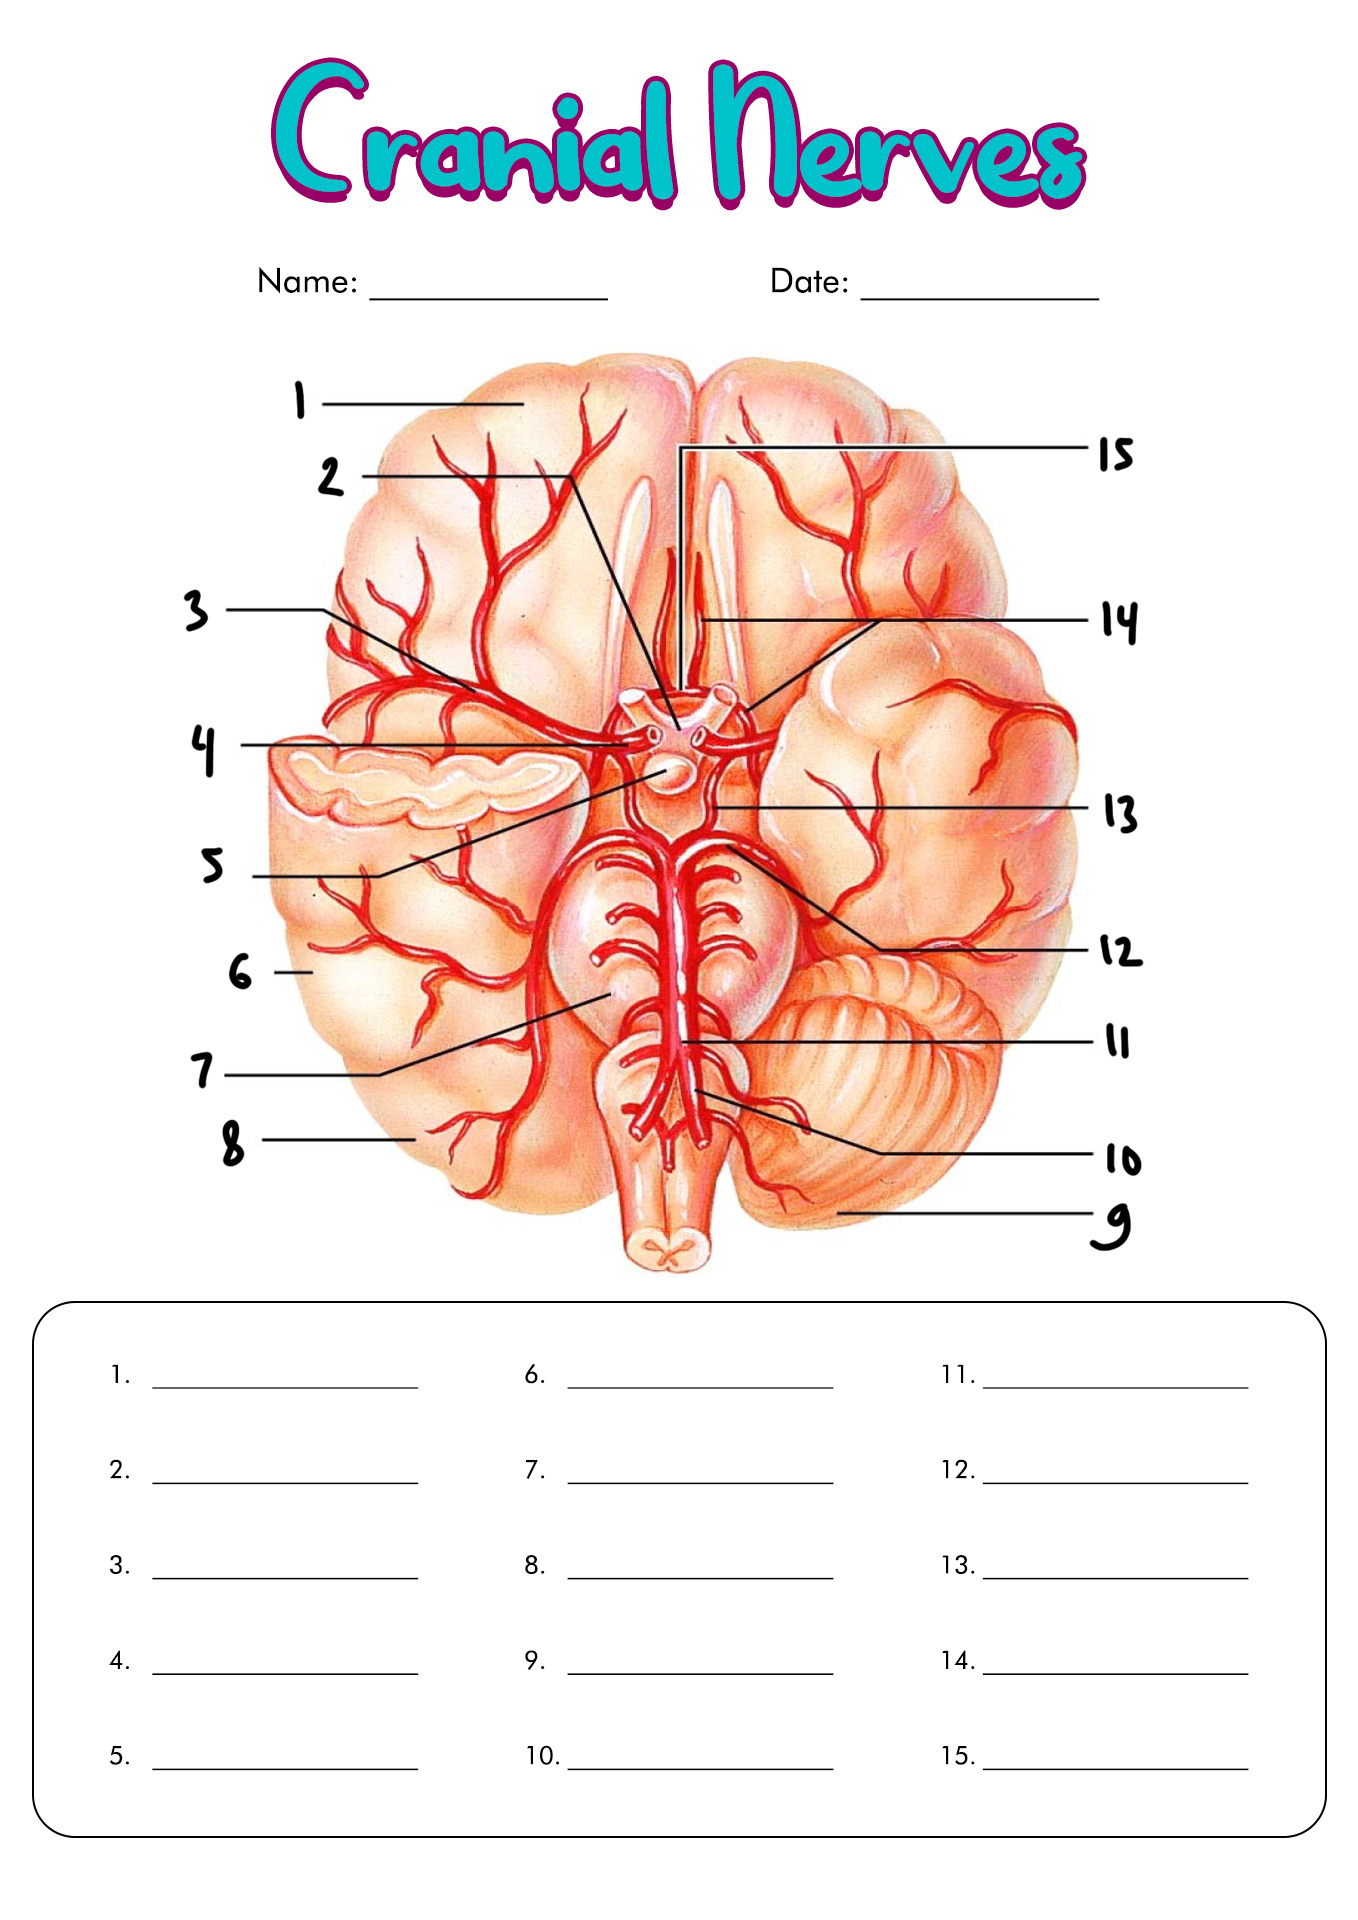 Cranial Nerves Labeling Quiz